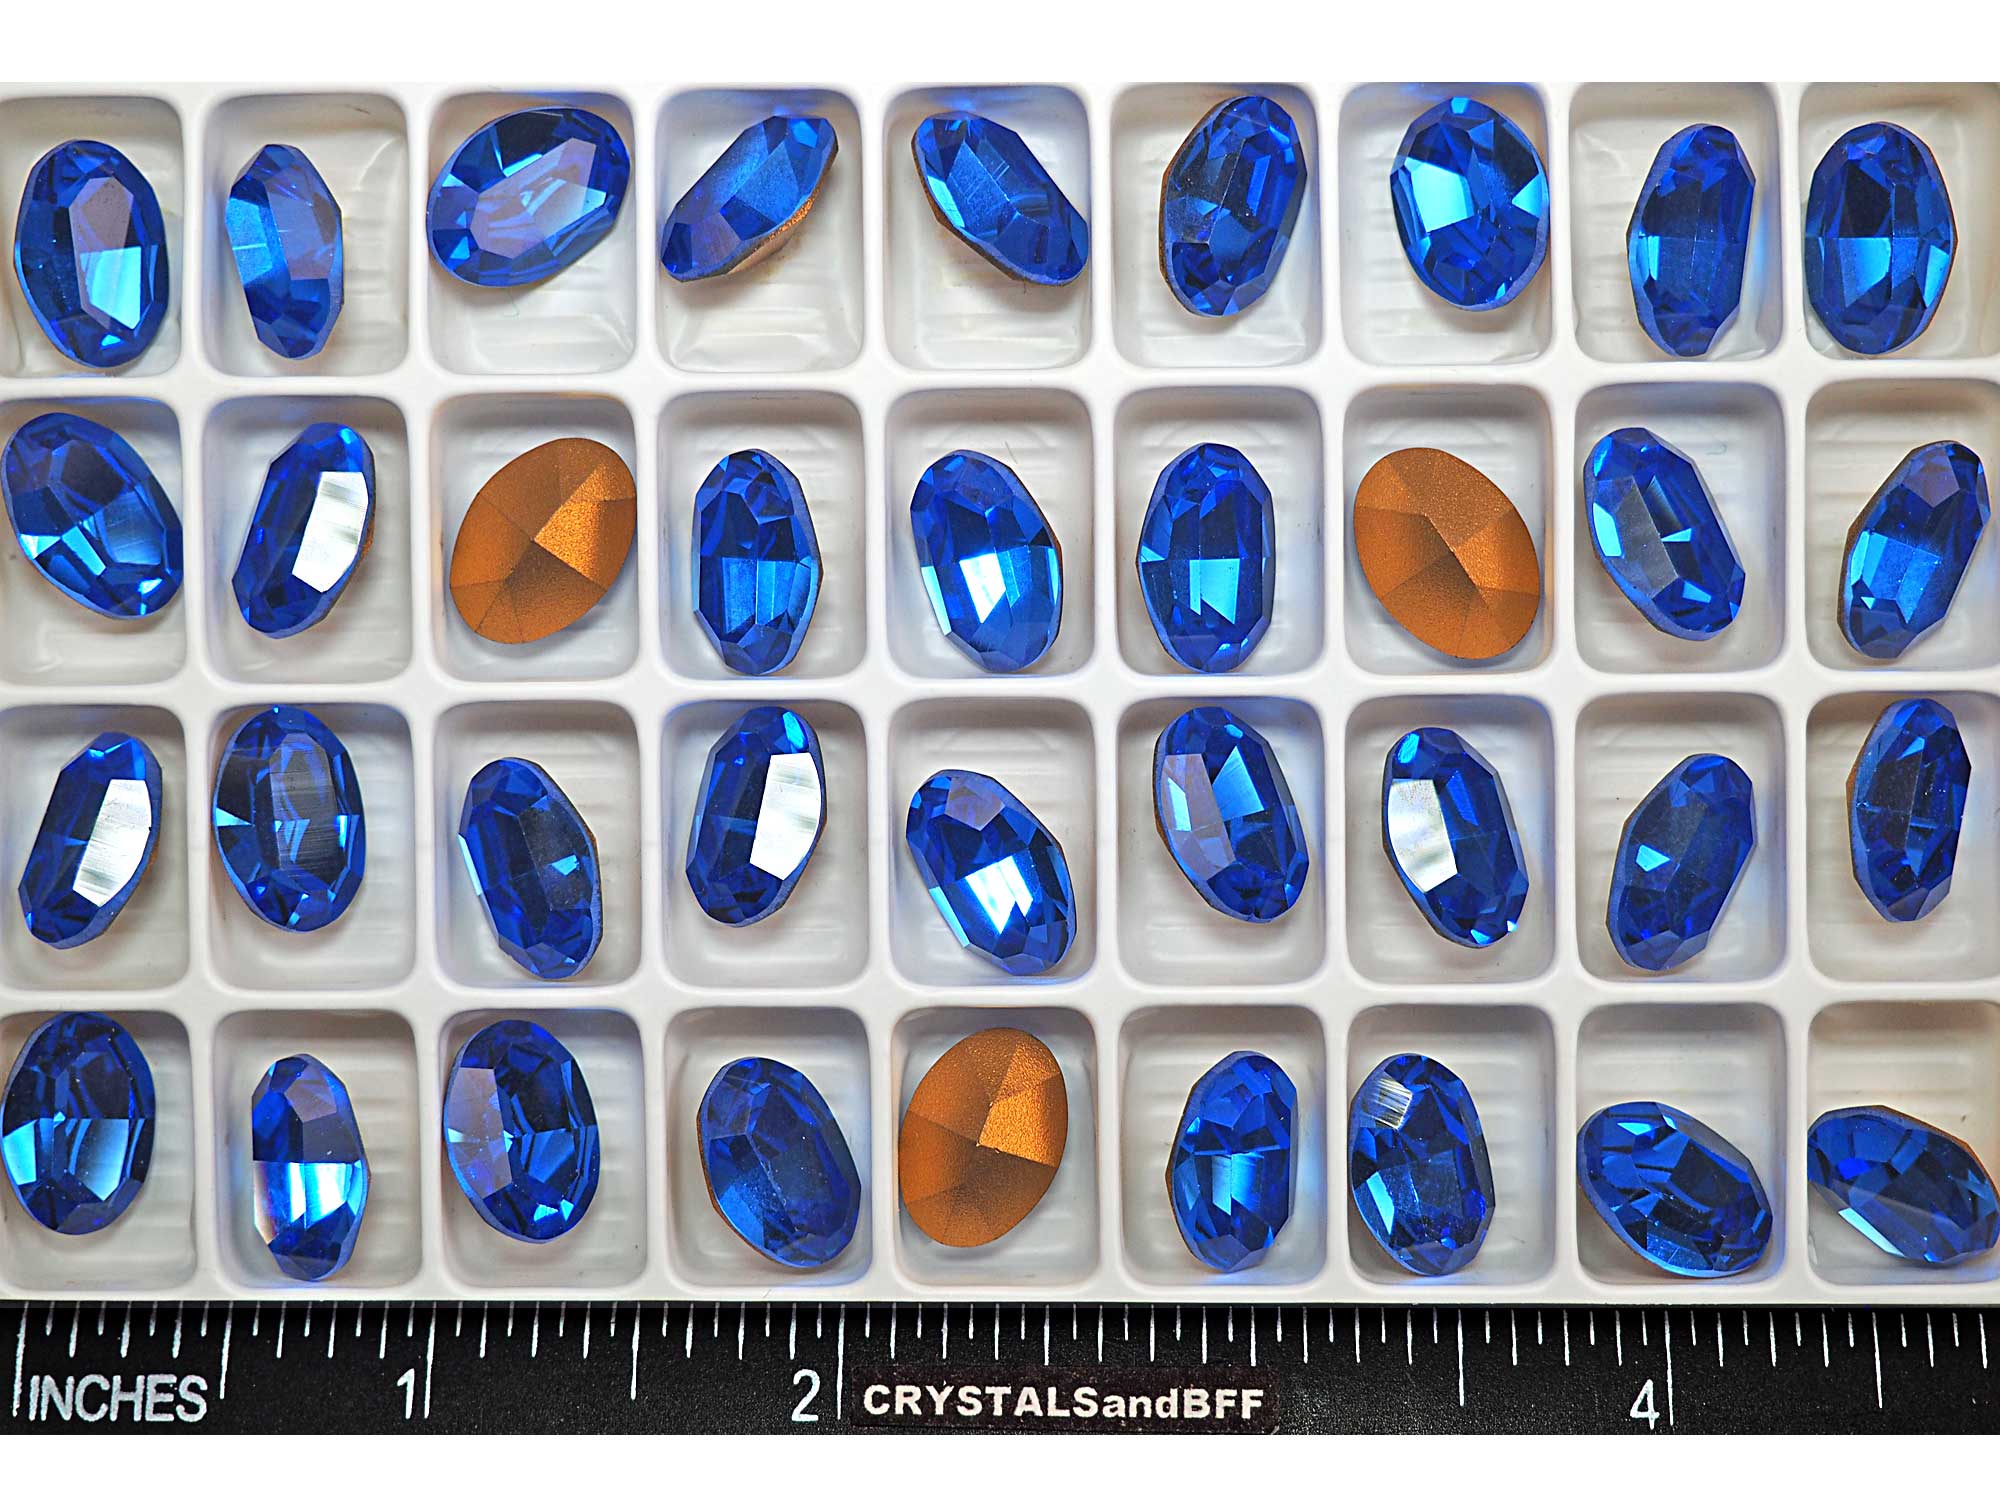 Sapphire, Preciosa Czech MC OVAL Stones in size 14x10mm, 12 pieces, Gold Foiled, P599